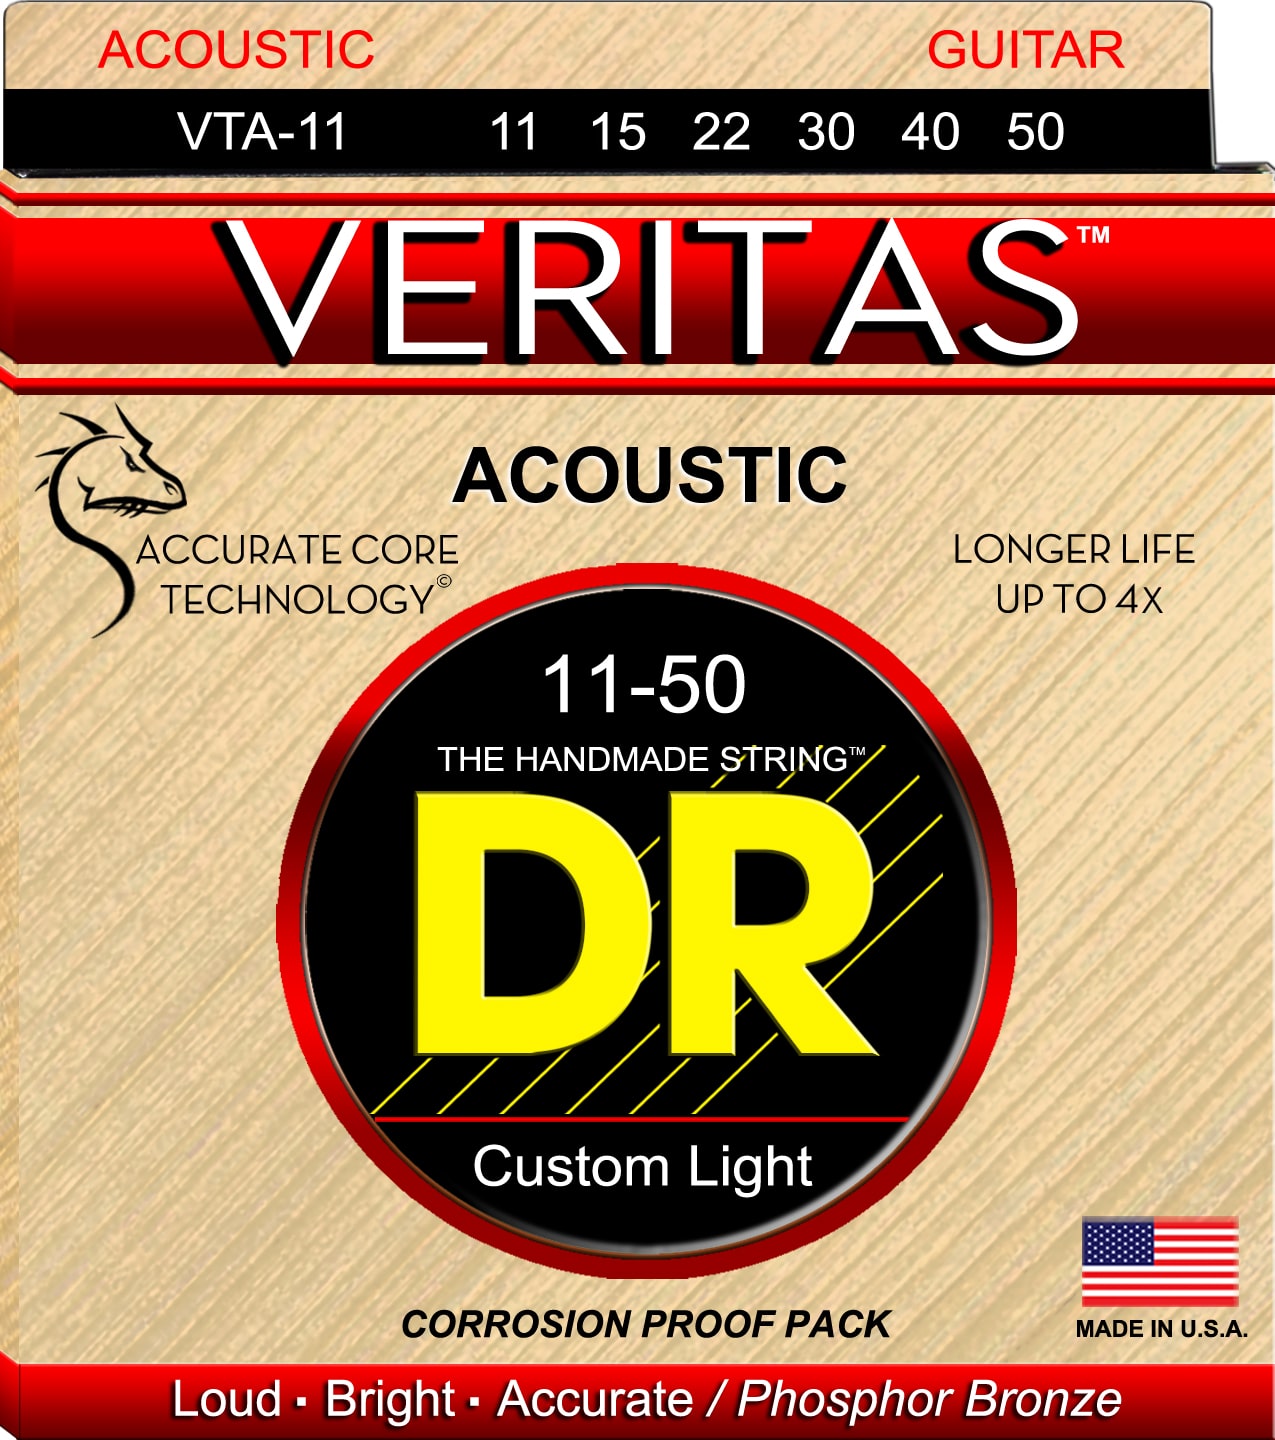 Press Release: DR STRINGS Announces Veritas Strings